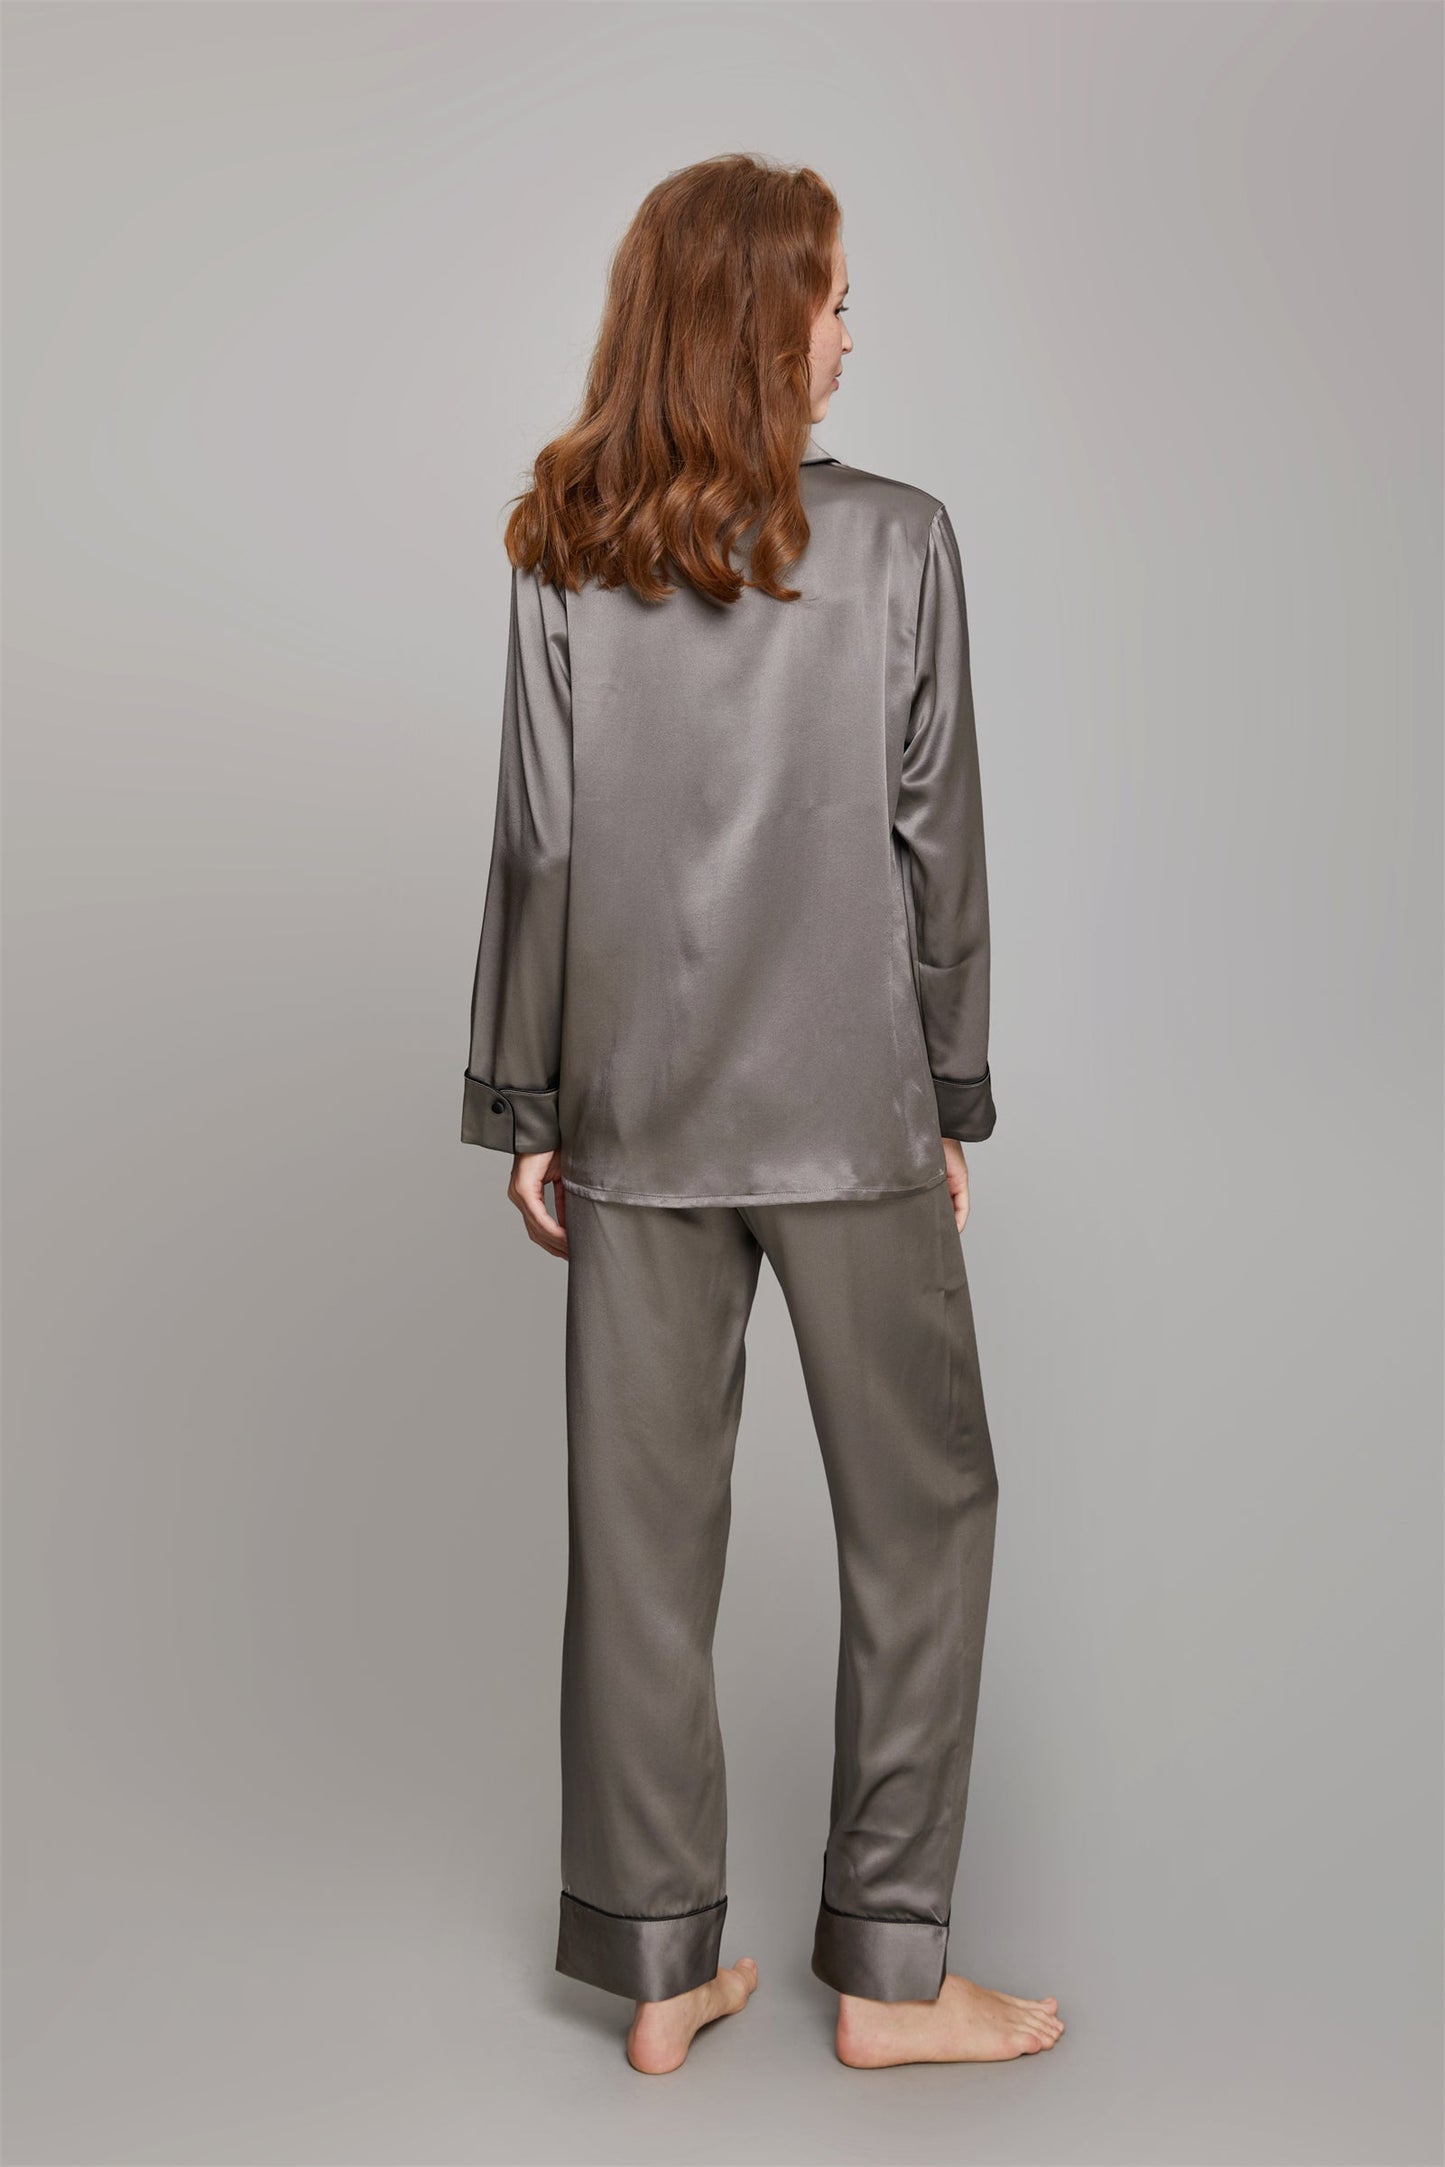 GRALACE Collar Piped Silk Pajama Set